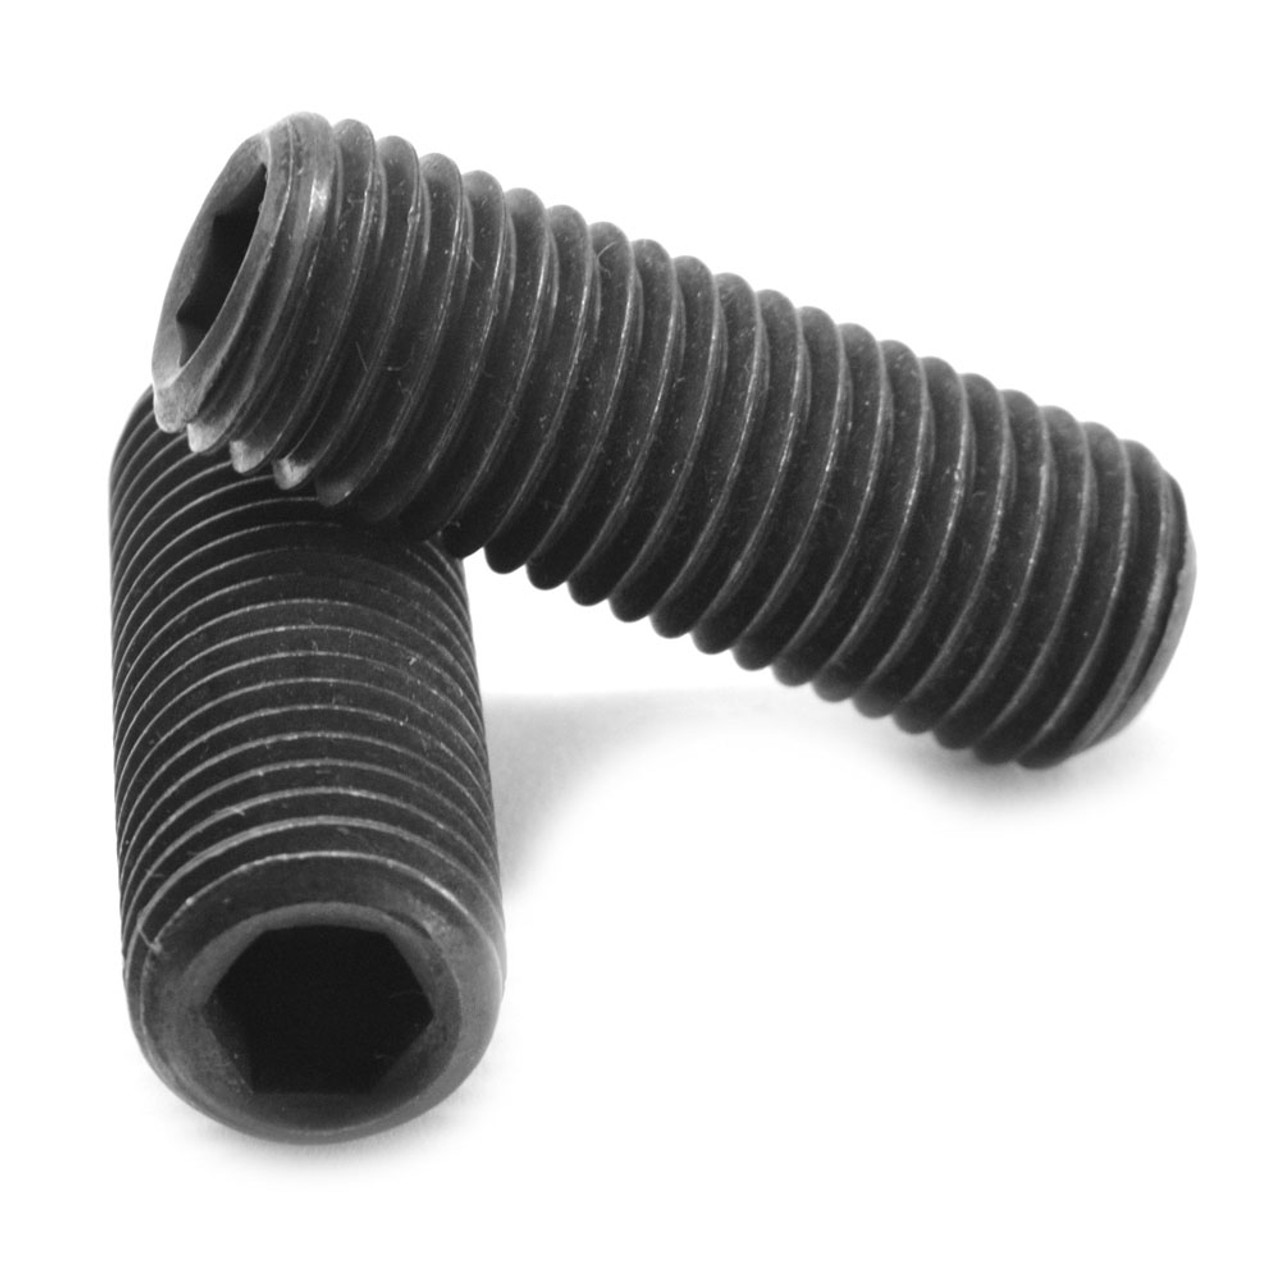 M12 x 1.75 x 65 MM Coarse Thread ISO 4029 / DIN 916 Class 45H Socket Set Screw Cup Point Alloy Steel Black Oxide